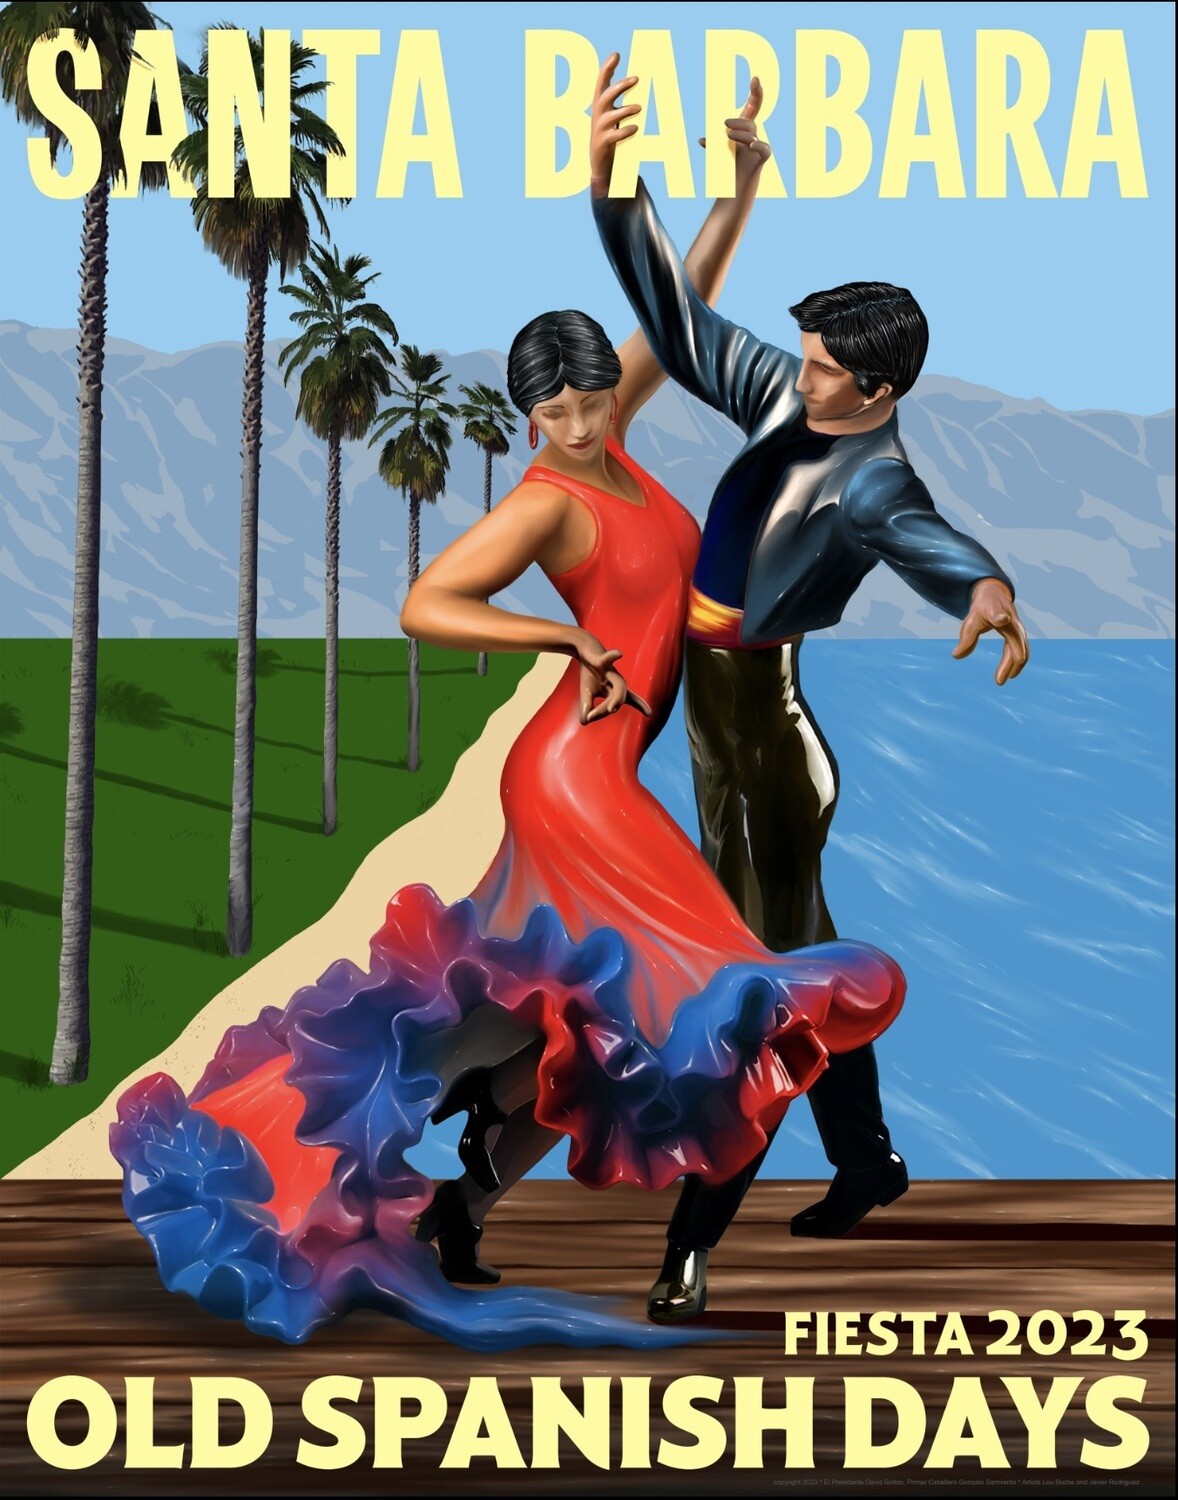 Old Spanish Days Fiesta 2023 Poster